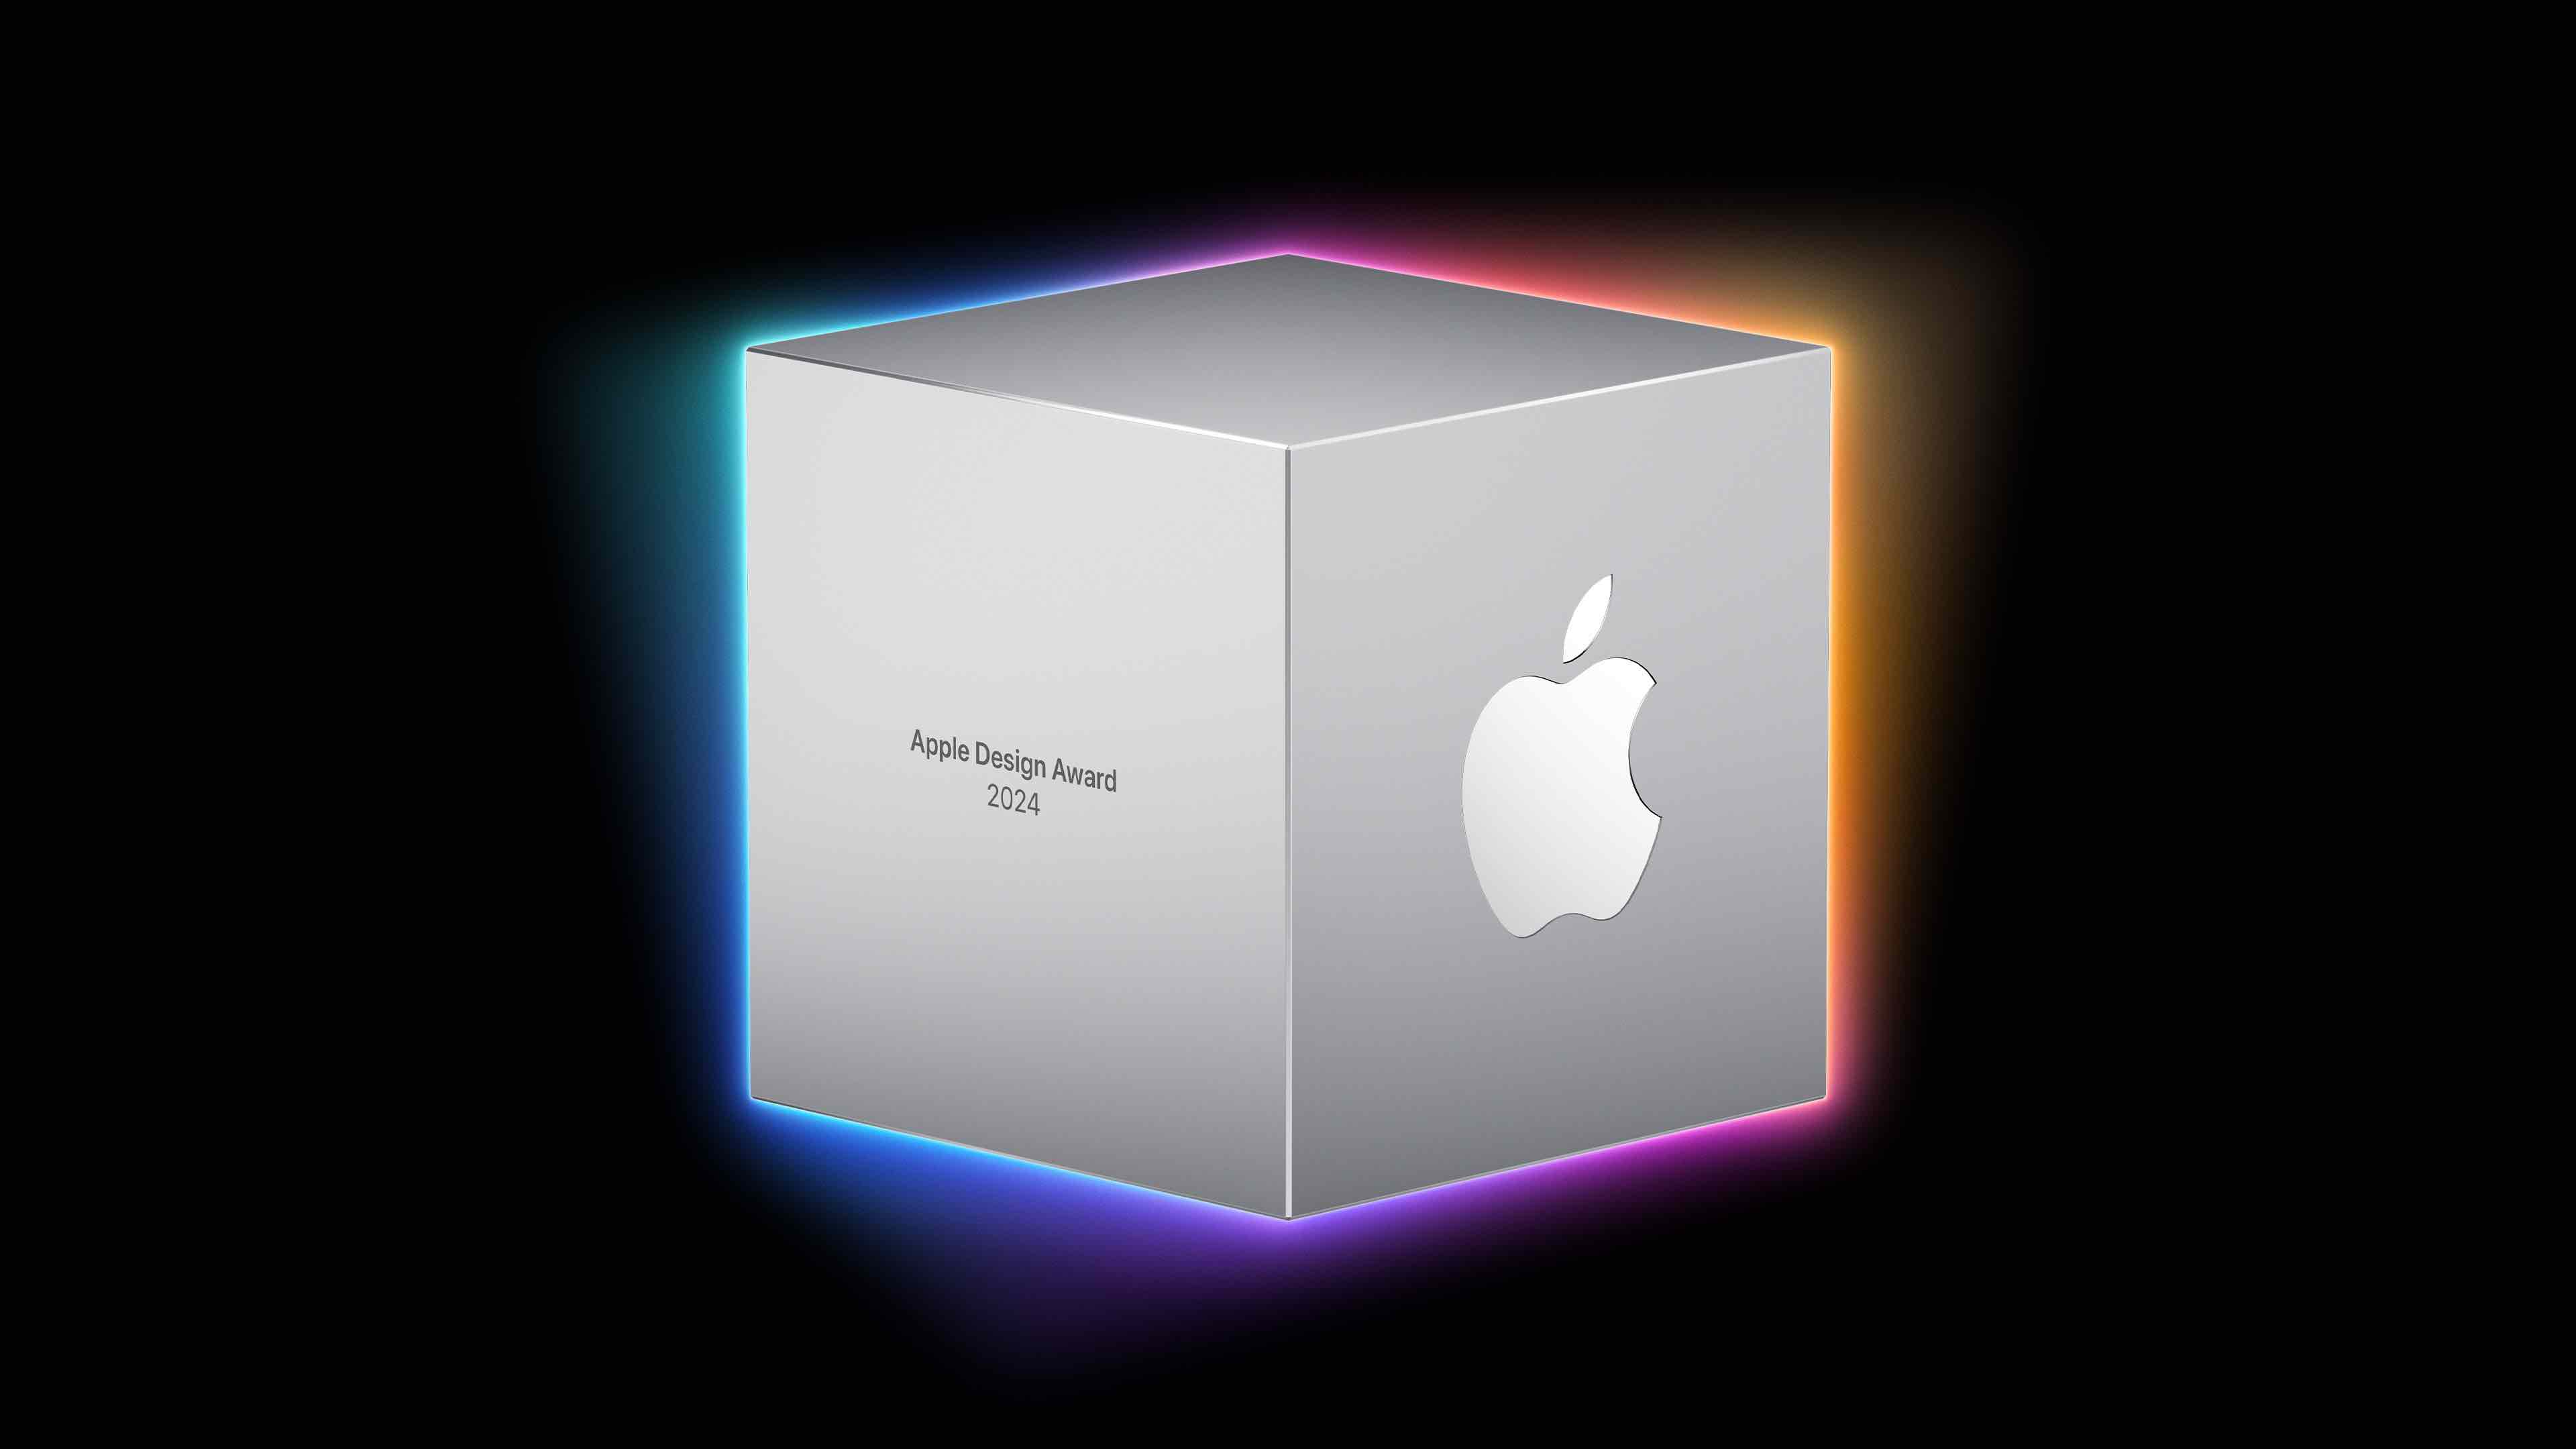 A look at Apple Design Award trophy.